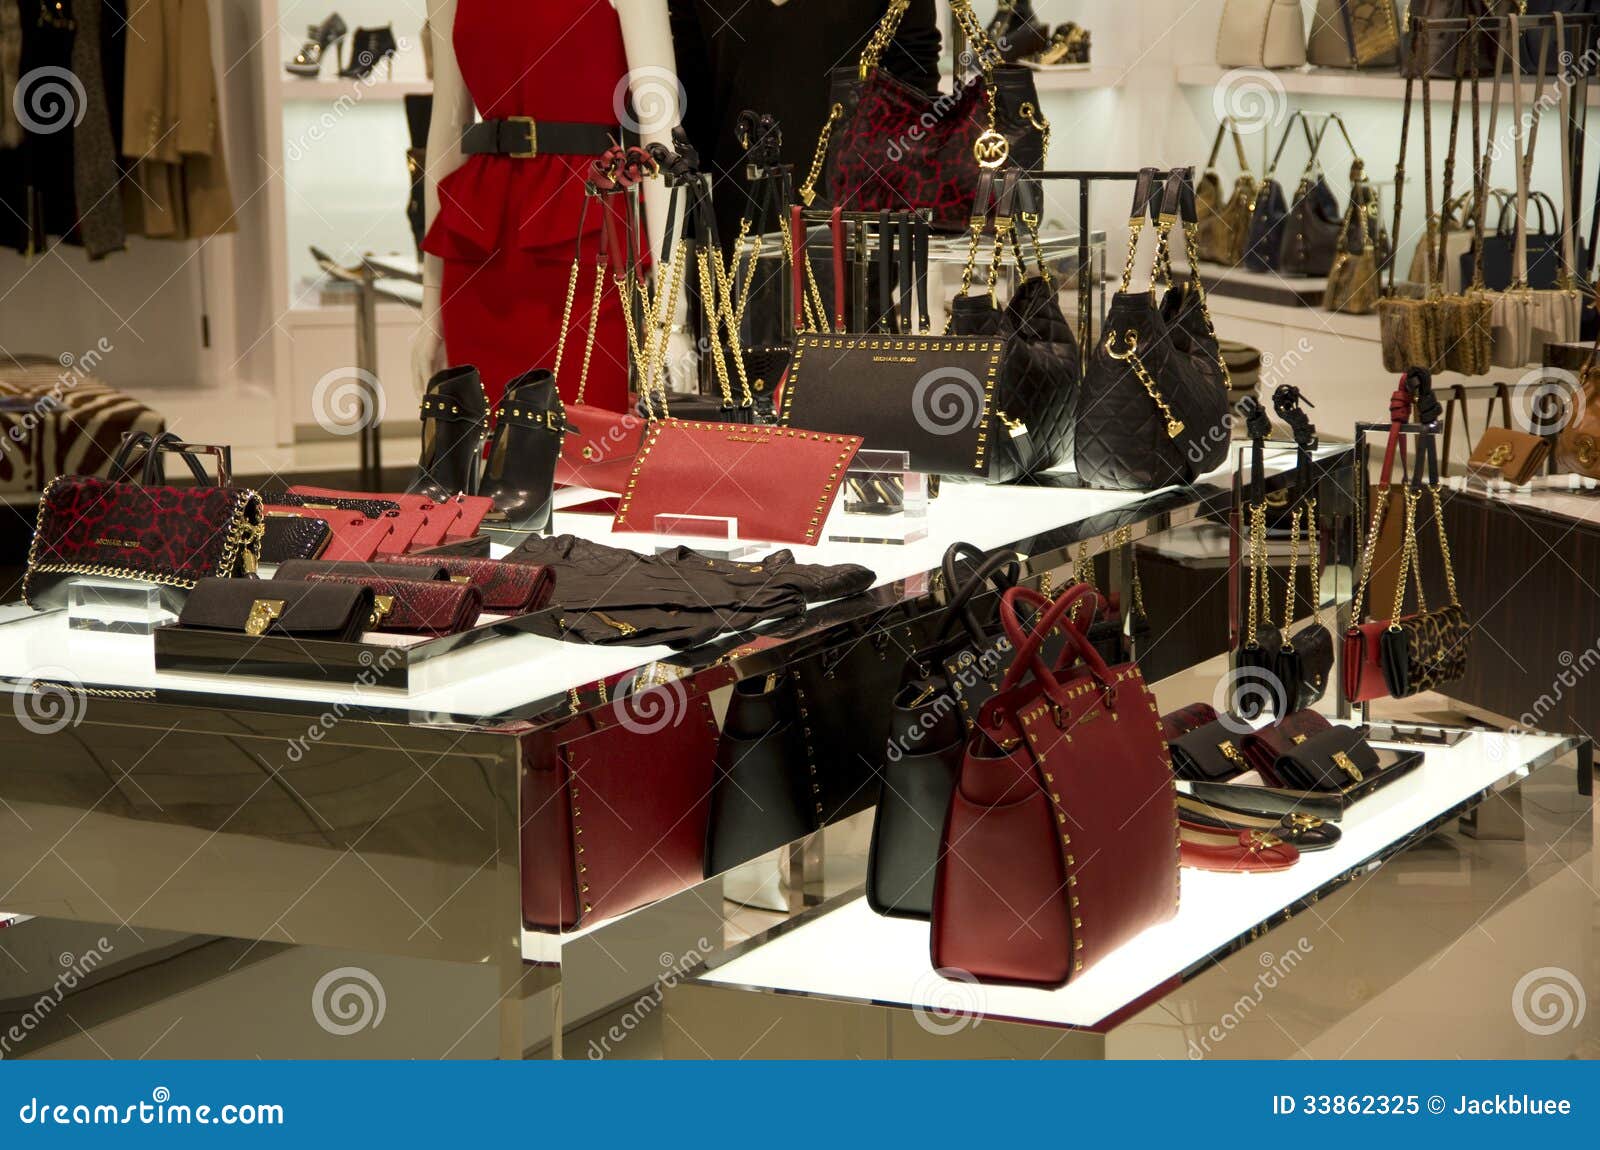 Luxury Handbag Purse Fashion Store Editorial Image - Image: 33862325